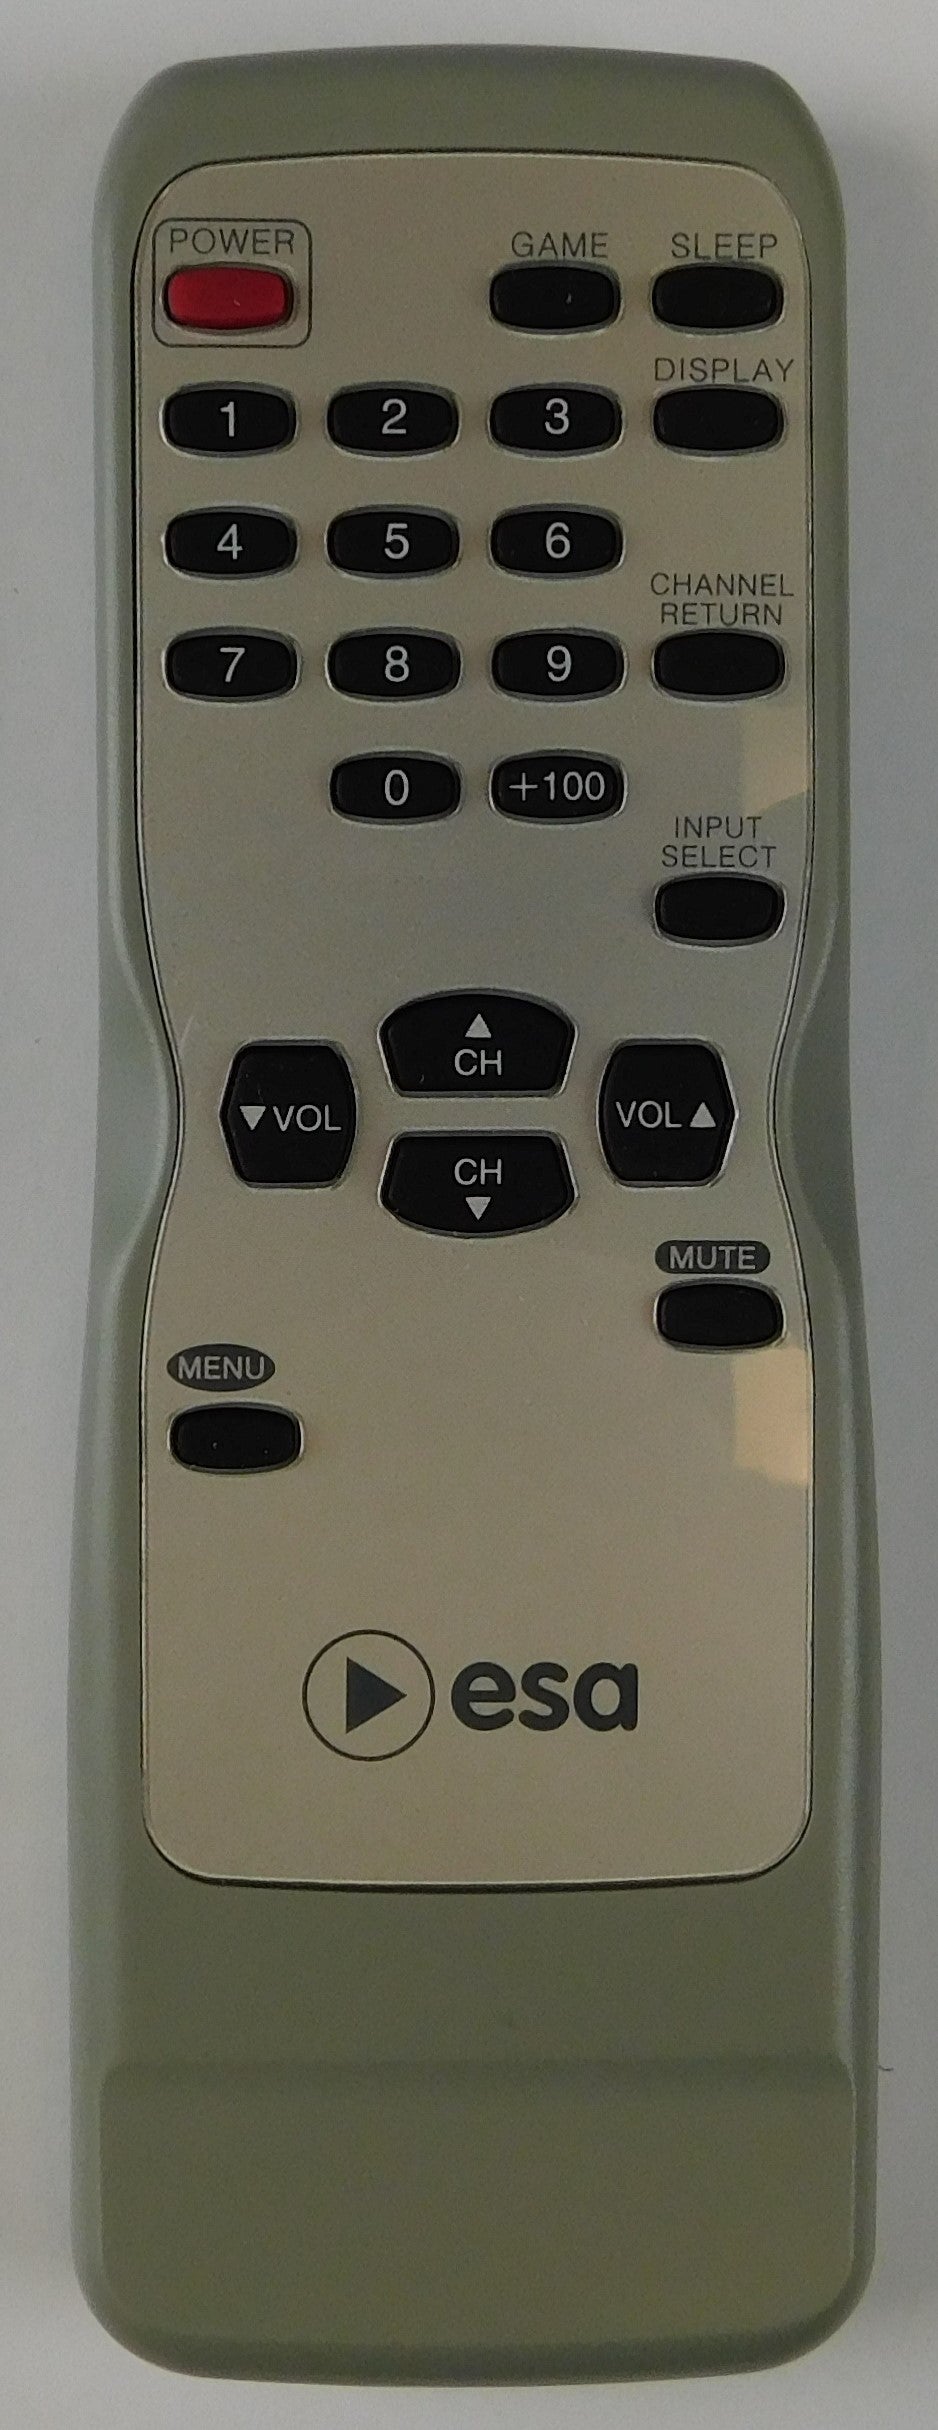 OEM replacement remote control for Durabrand, ESA, Emerson, Sylvania, Symphonic CRT TV NE147UD